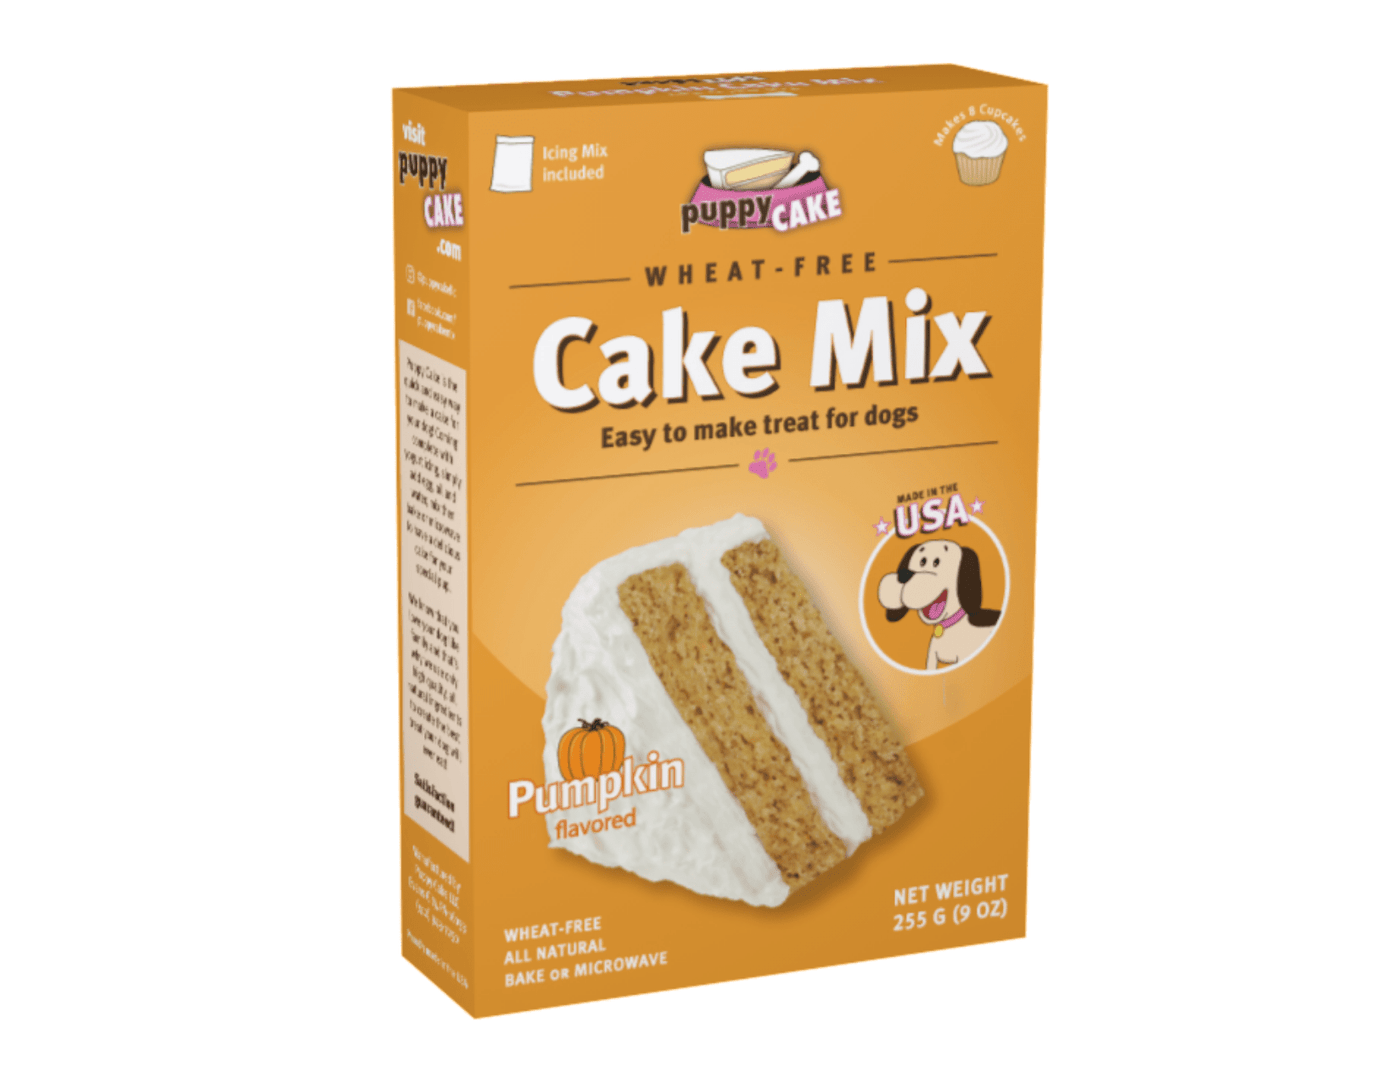 Puppy Cake Mix - Pumpkin (wheat-free) - PetToba-Puppy Cake